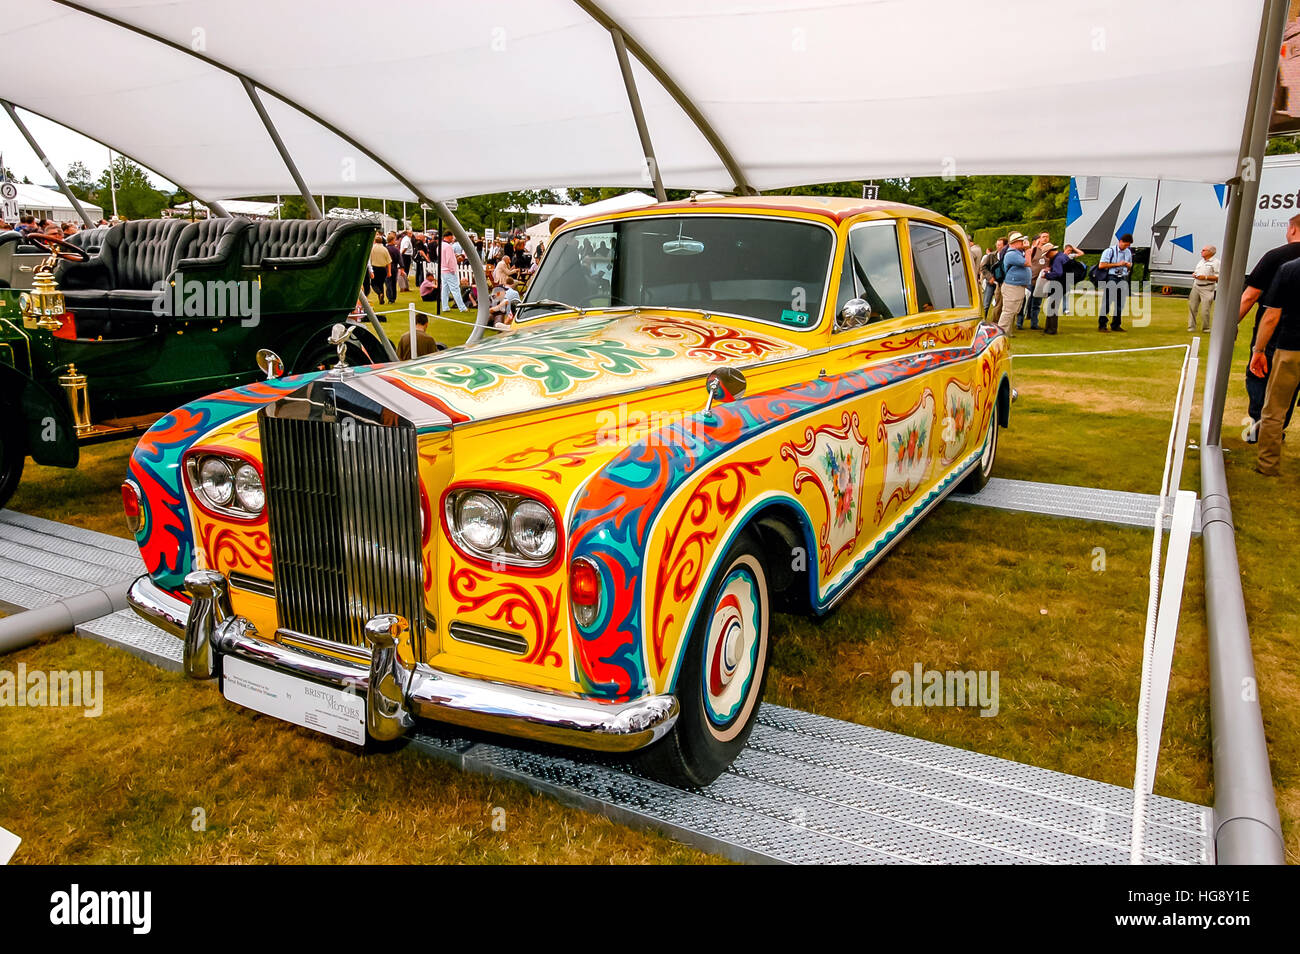 John Lennon's colourful Rolls Royce on display Stock Photo